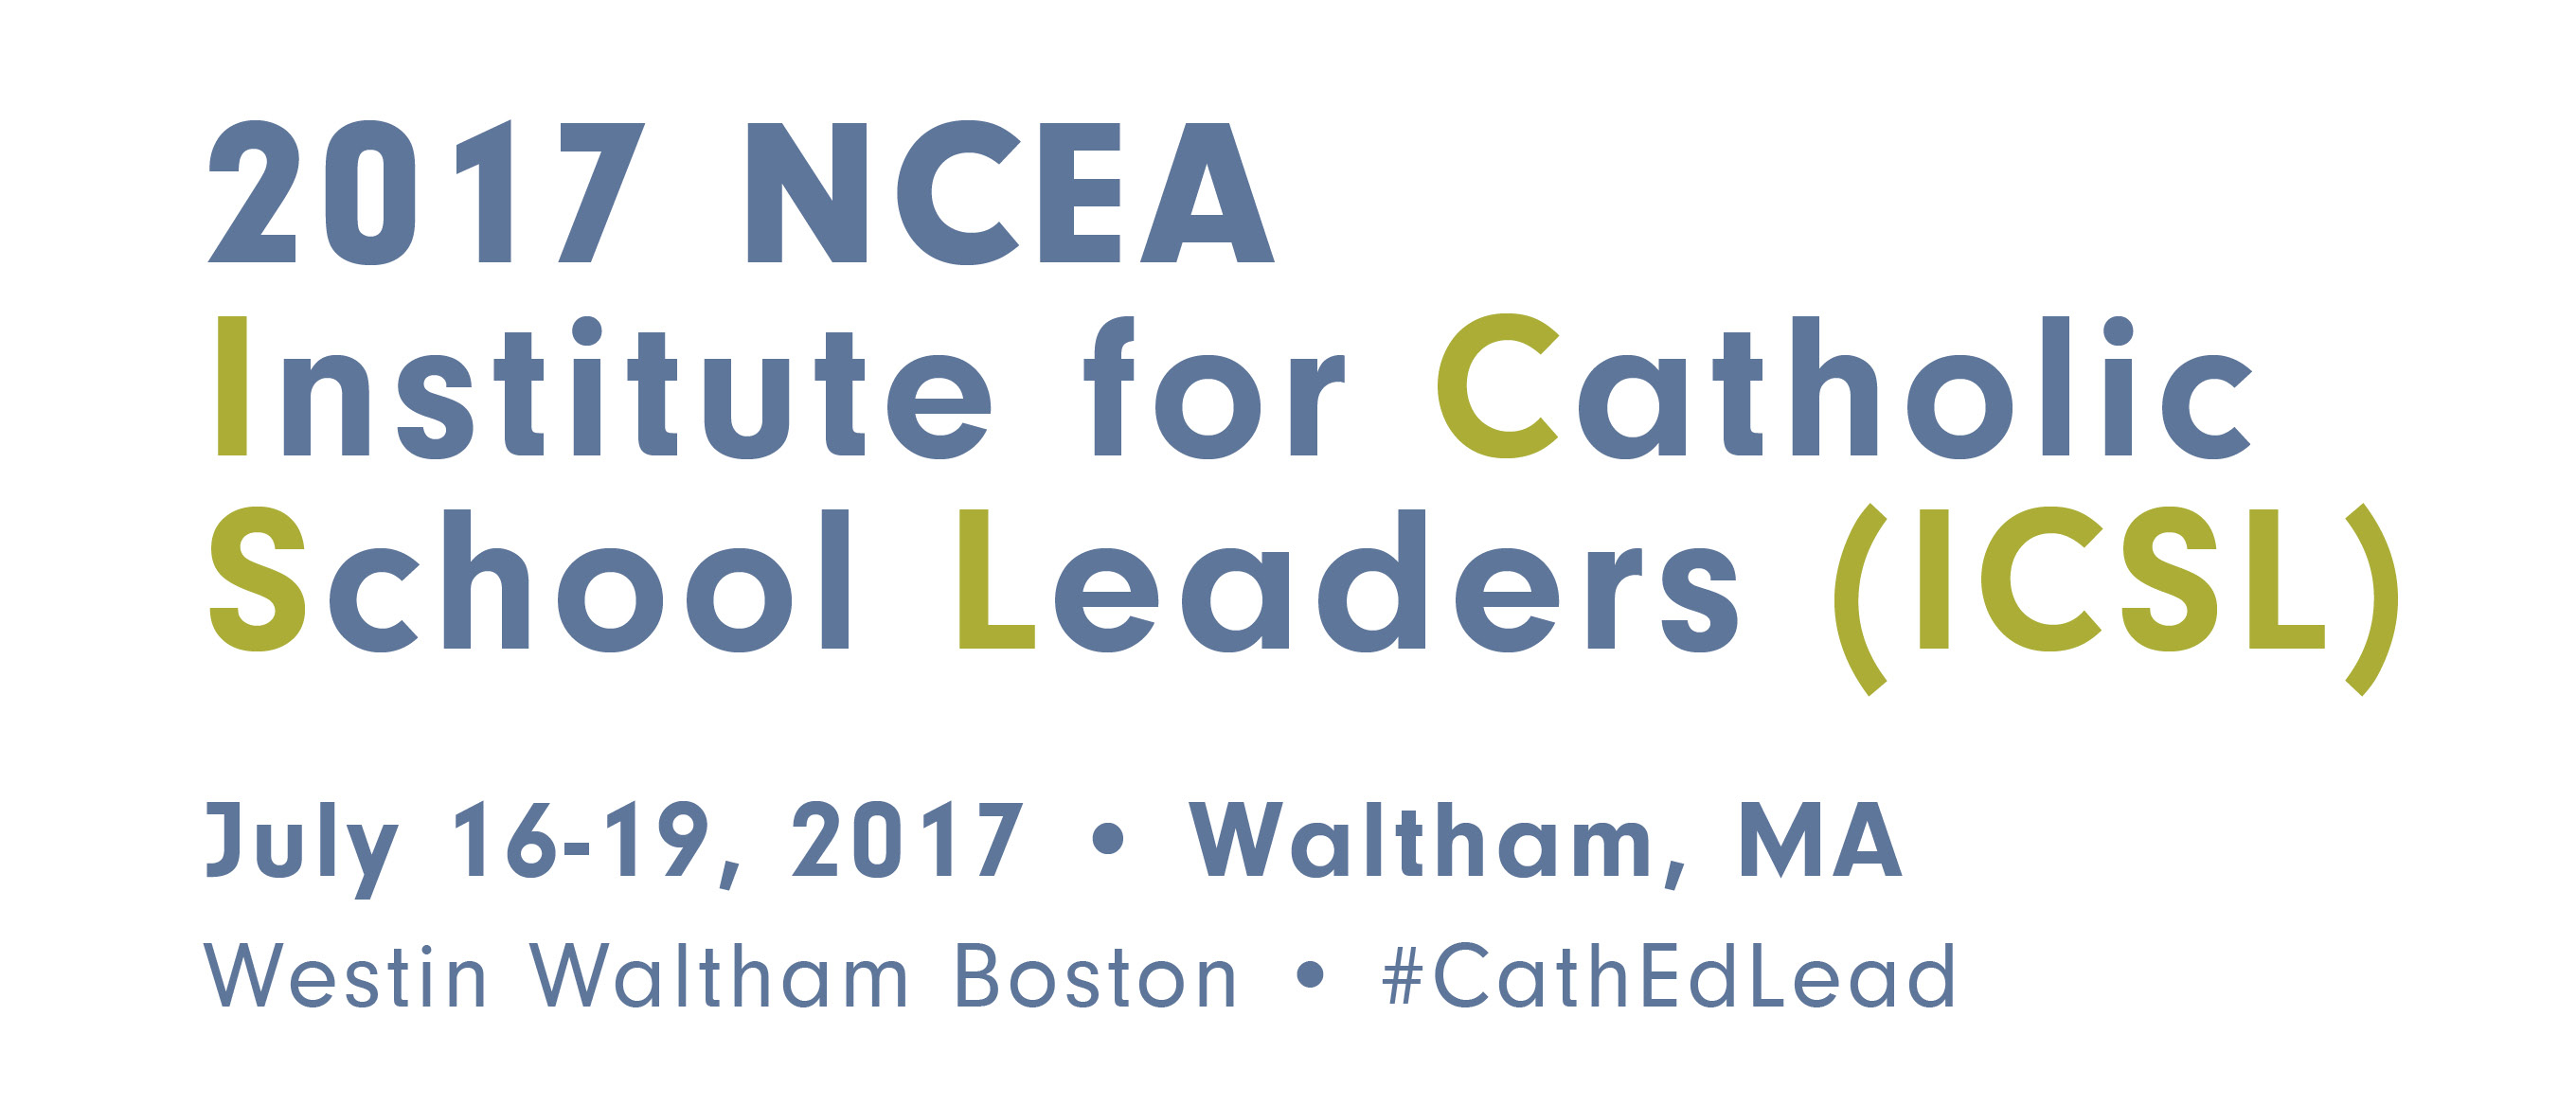 2017 NCEA Institute for Catholic School Leaders